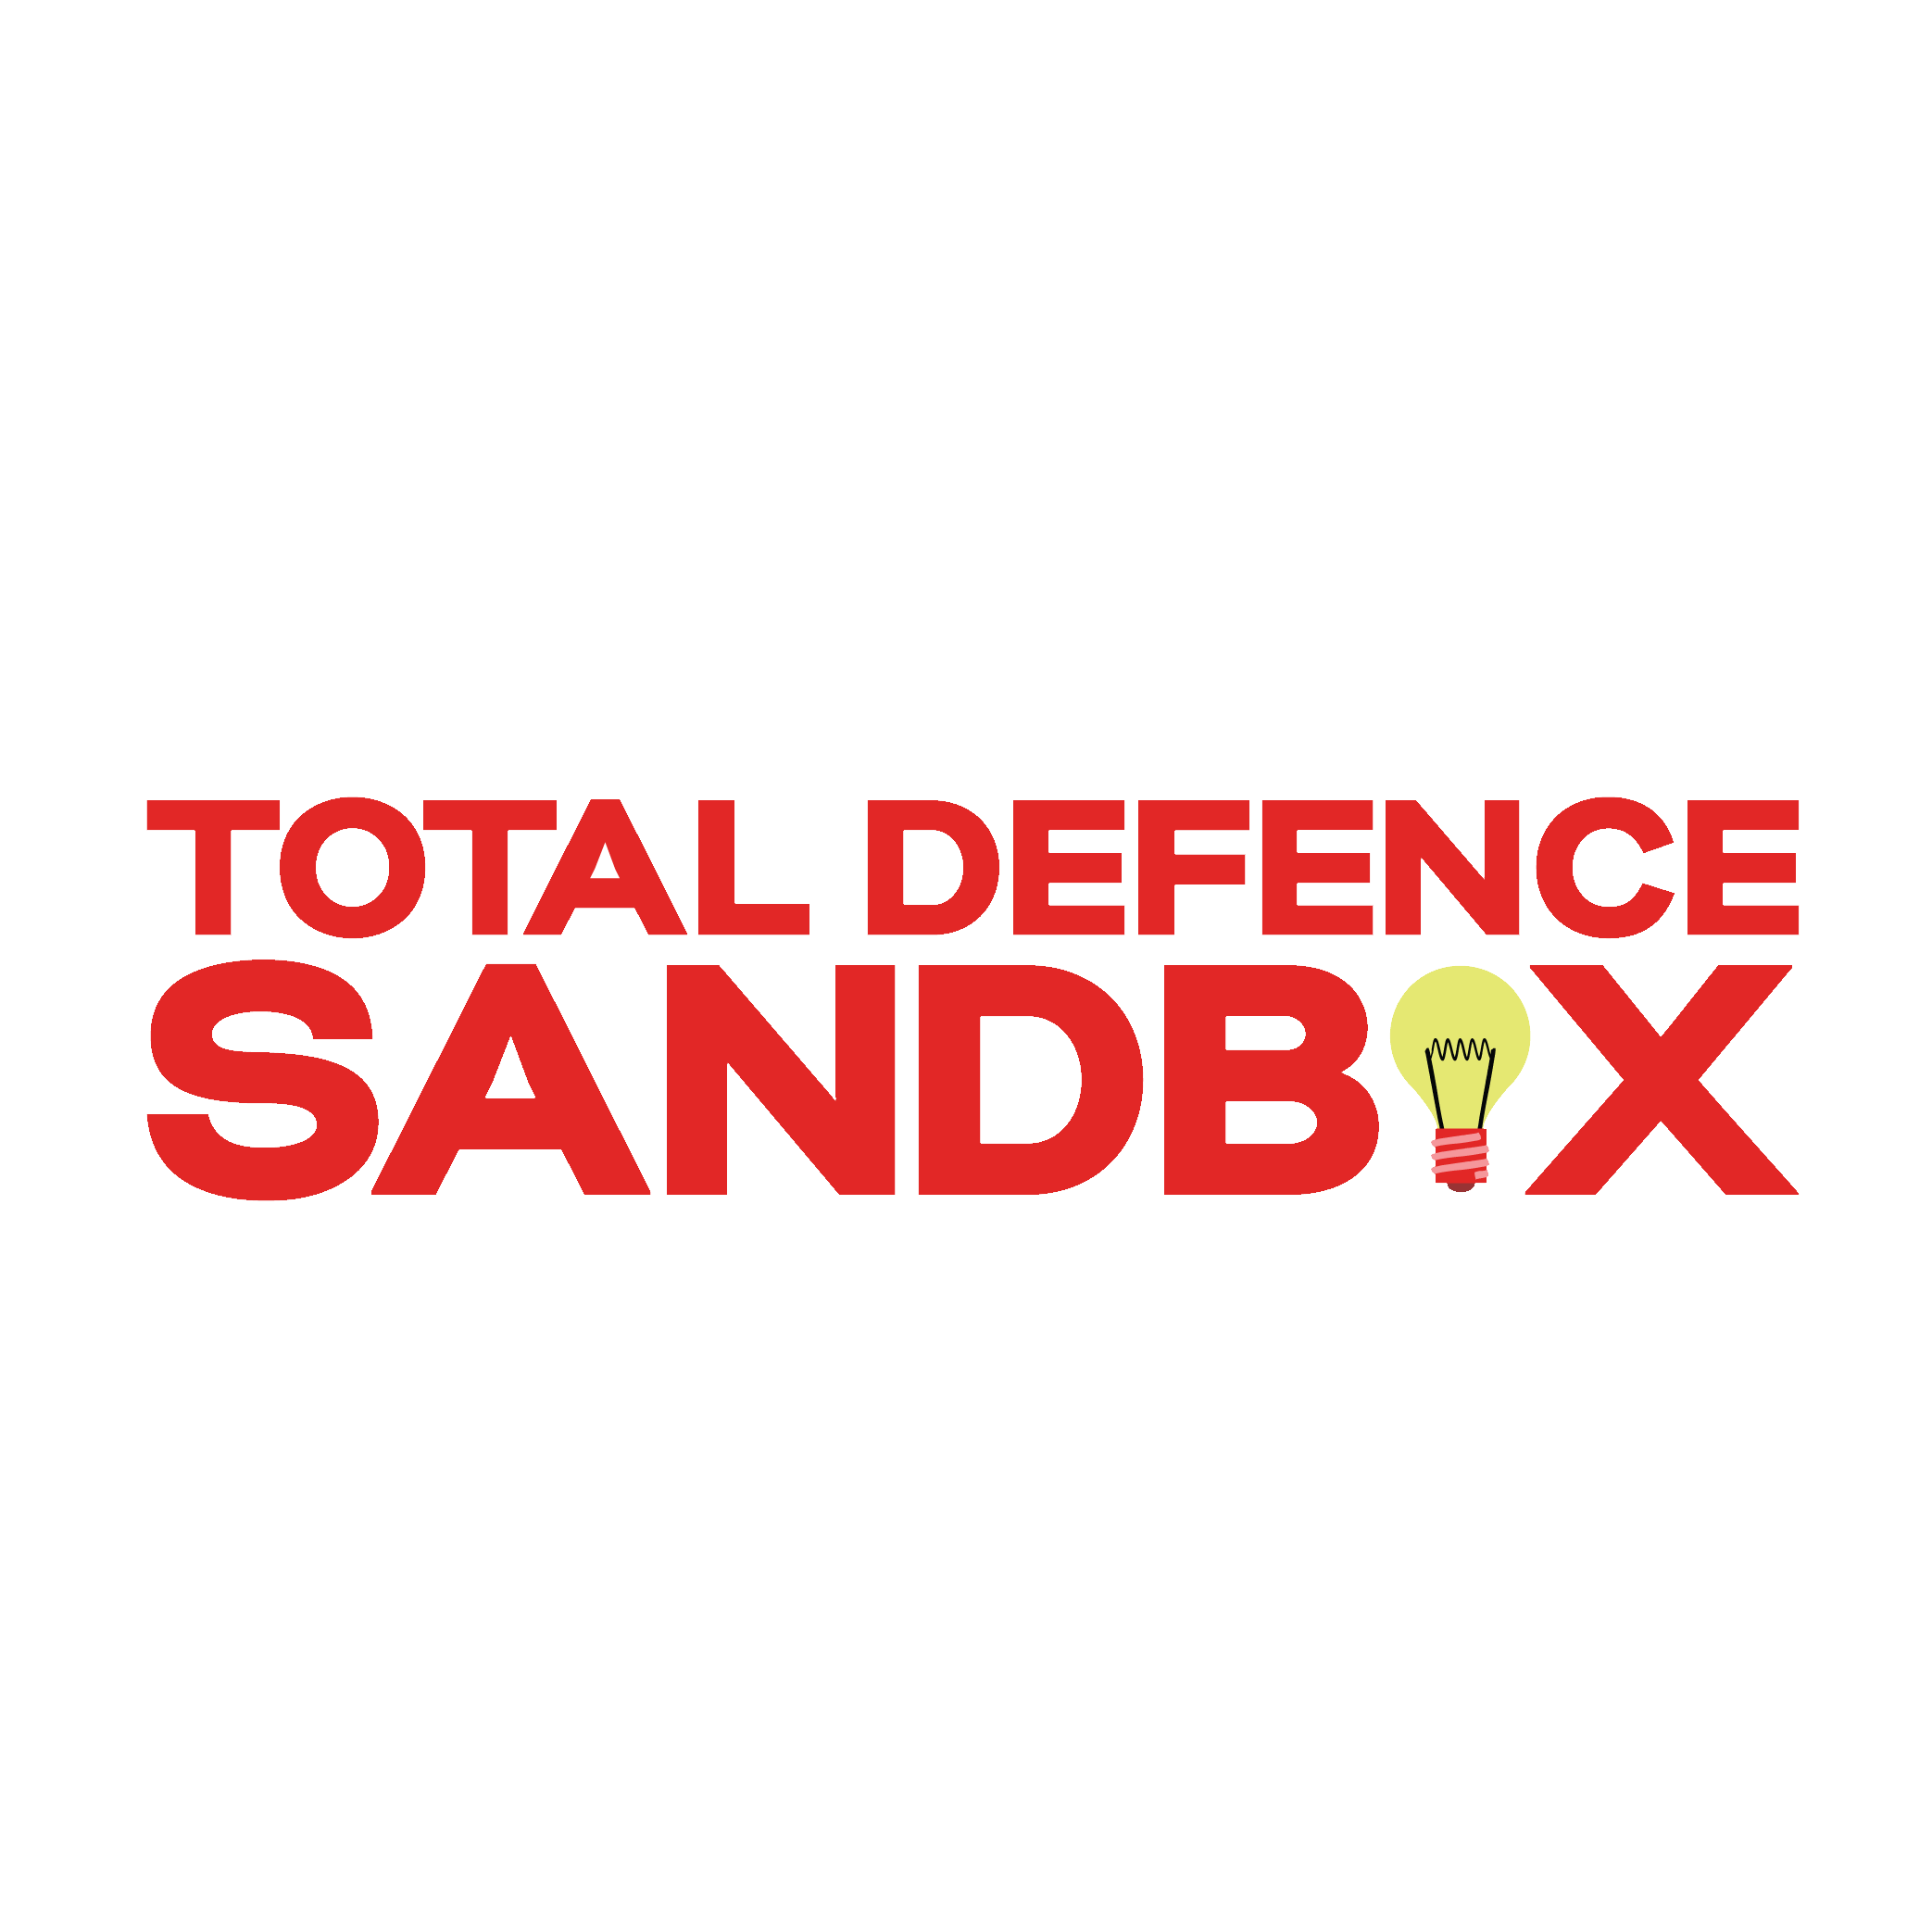 Total Defence Sandbox